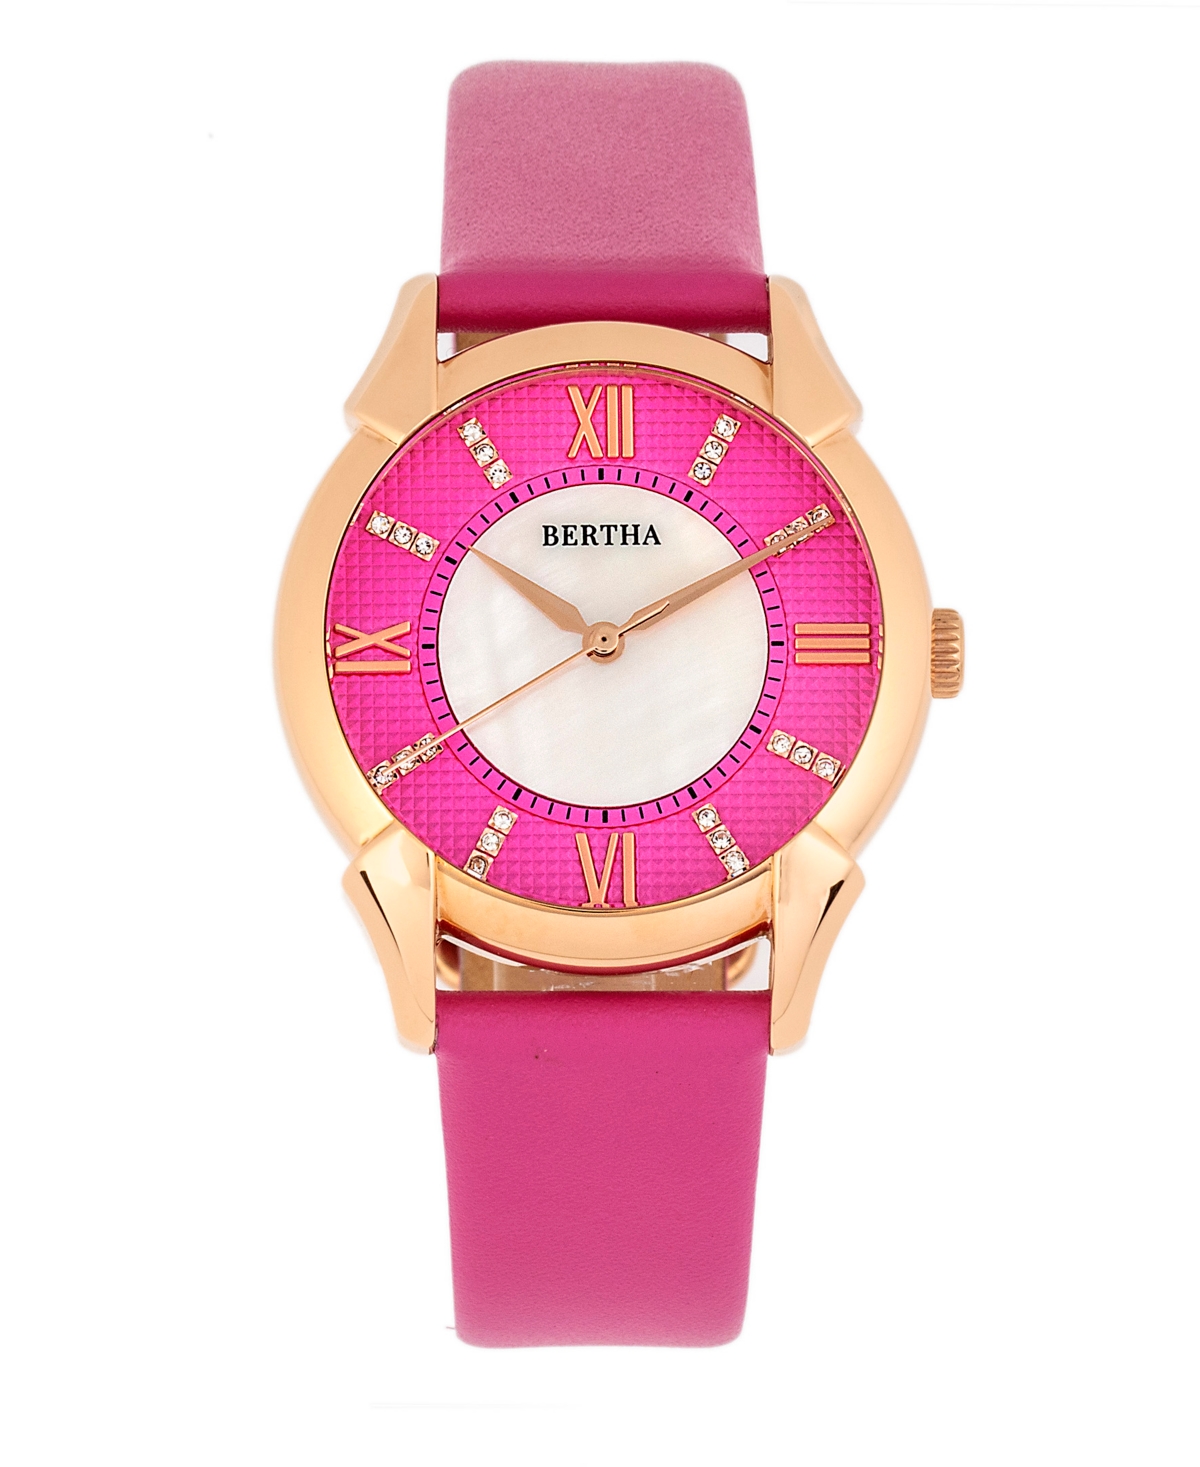 Bertha Ida Black or Blue or Green or Purple or Beige or Pink Leather Band Watch, 36mm